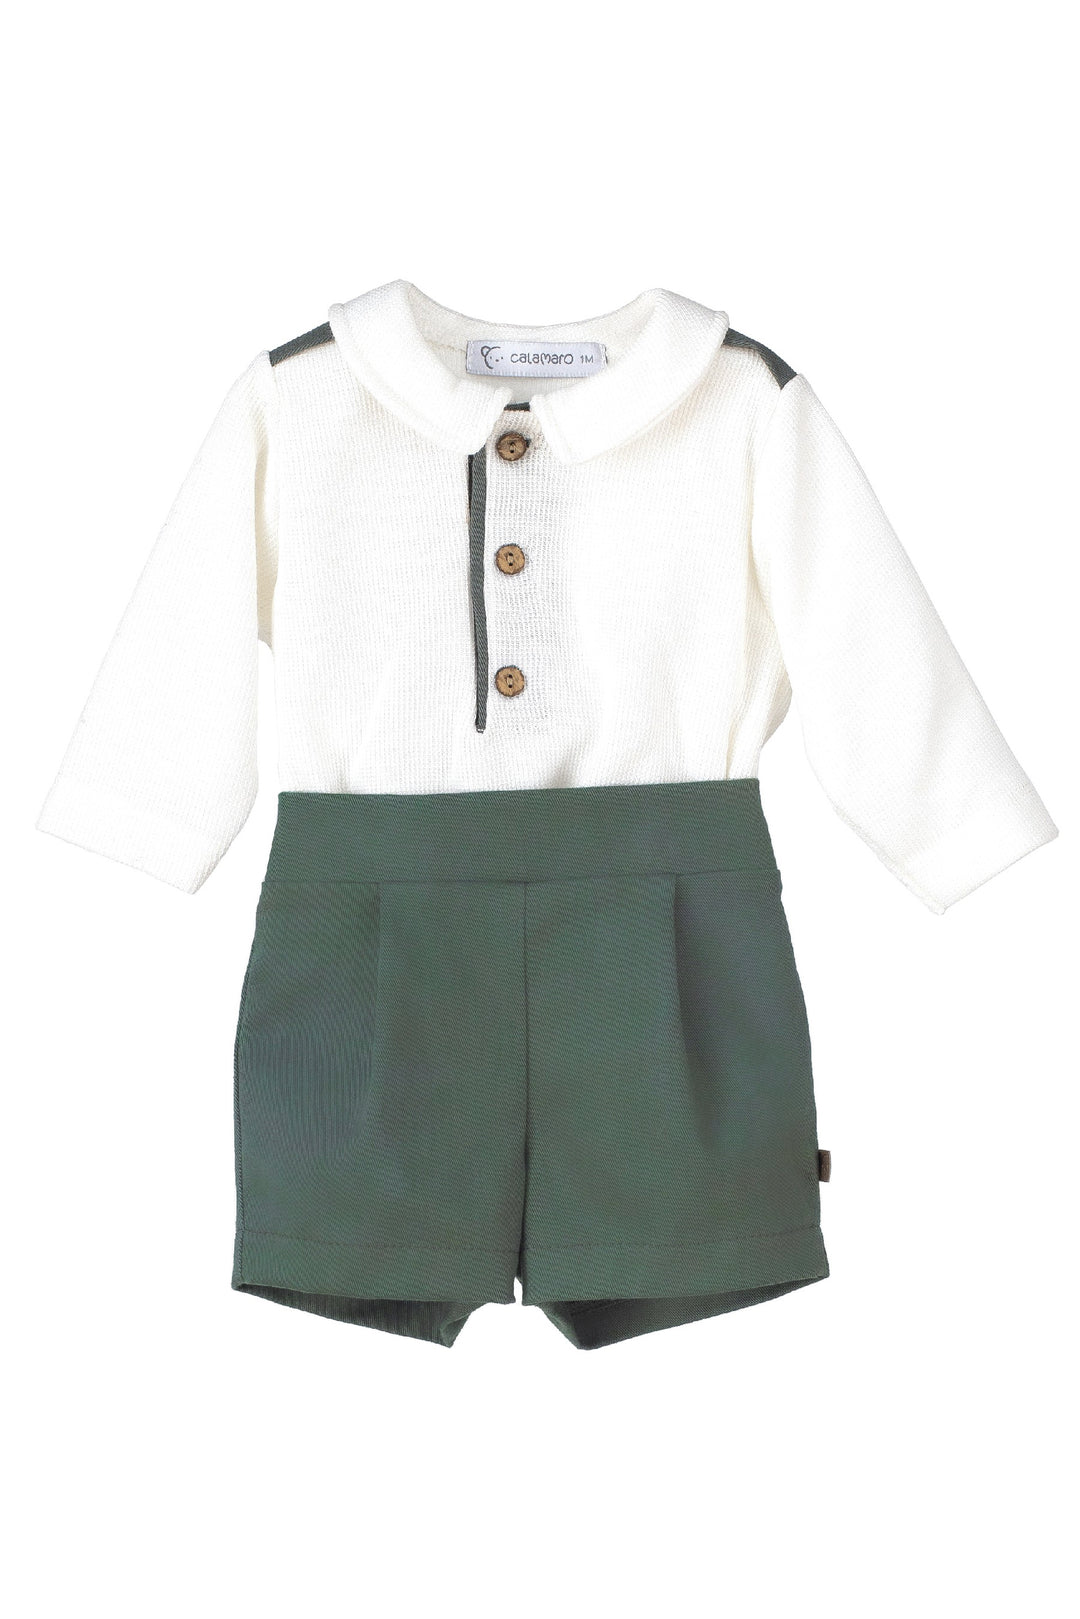 Calamaro "Levi" White Shirt & Khaki Shorts | Millie and John